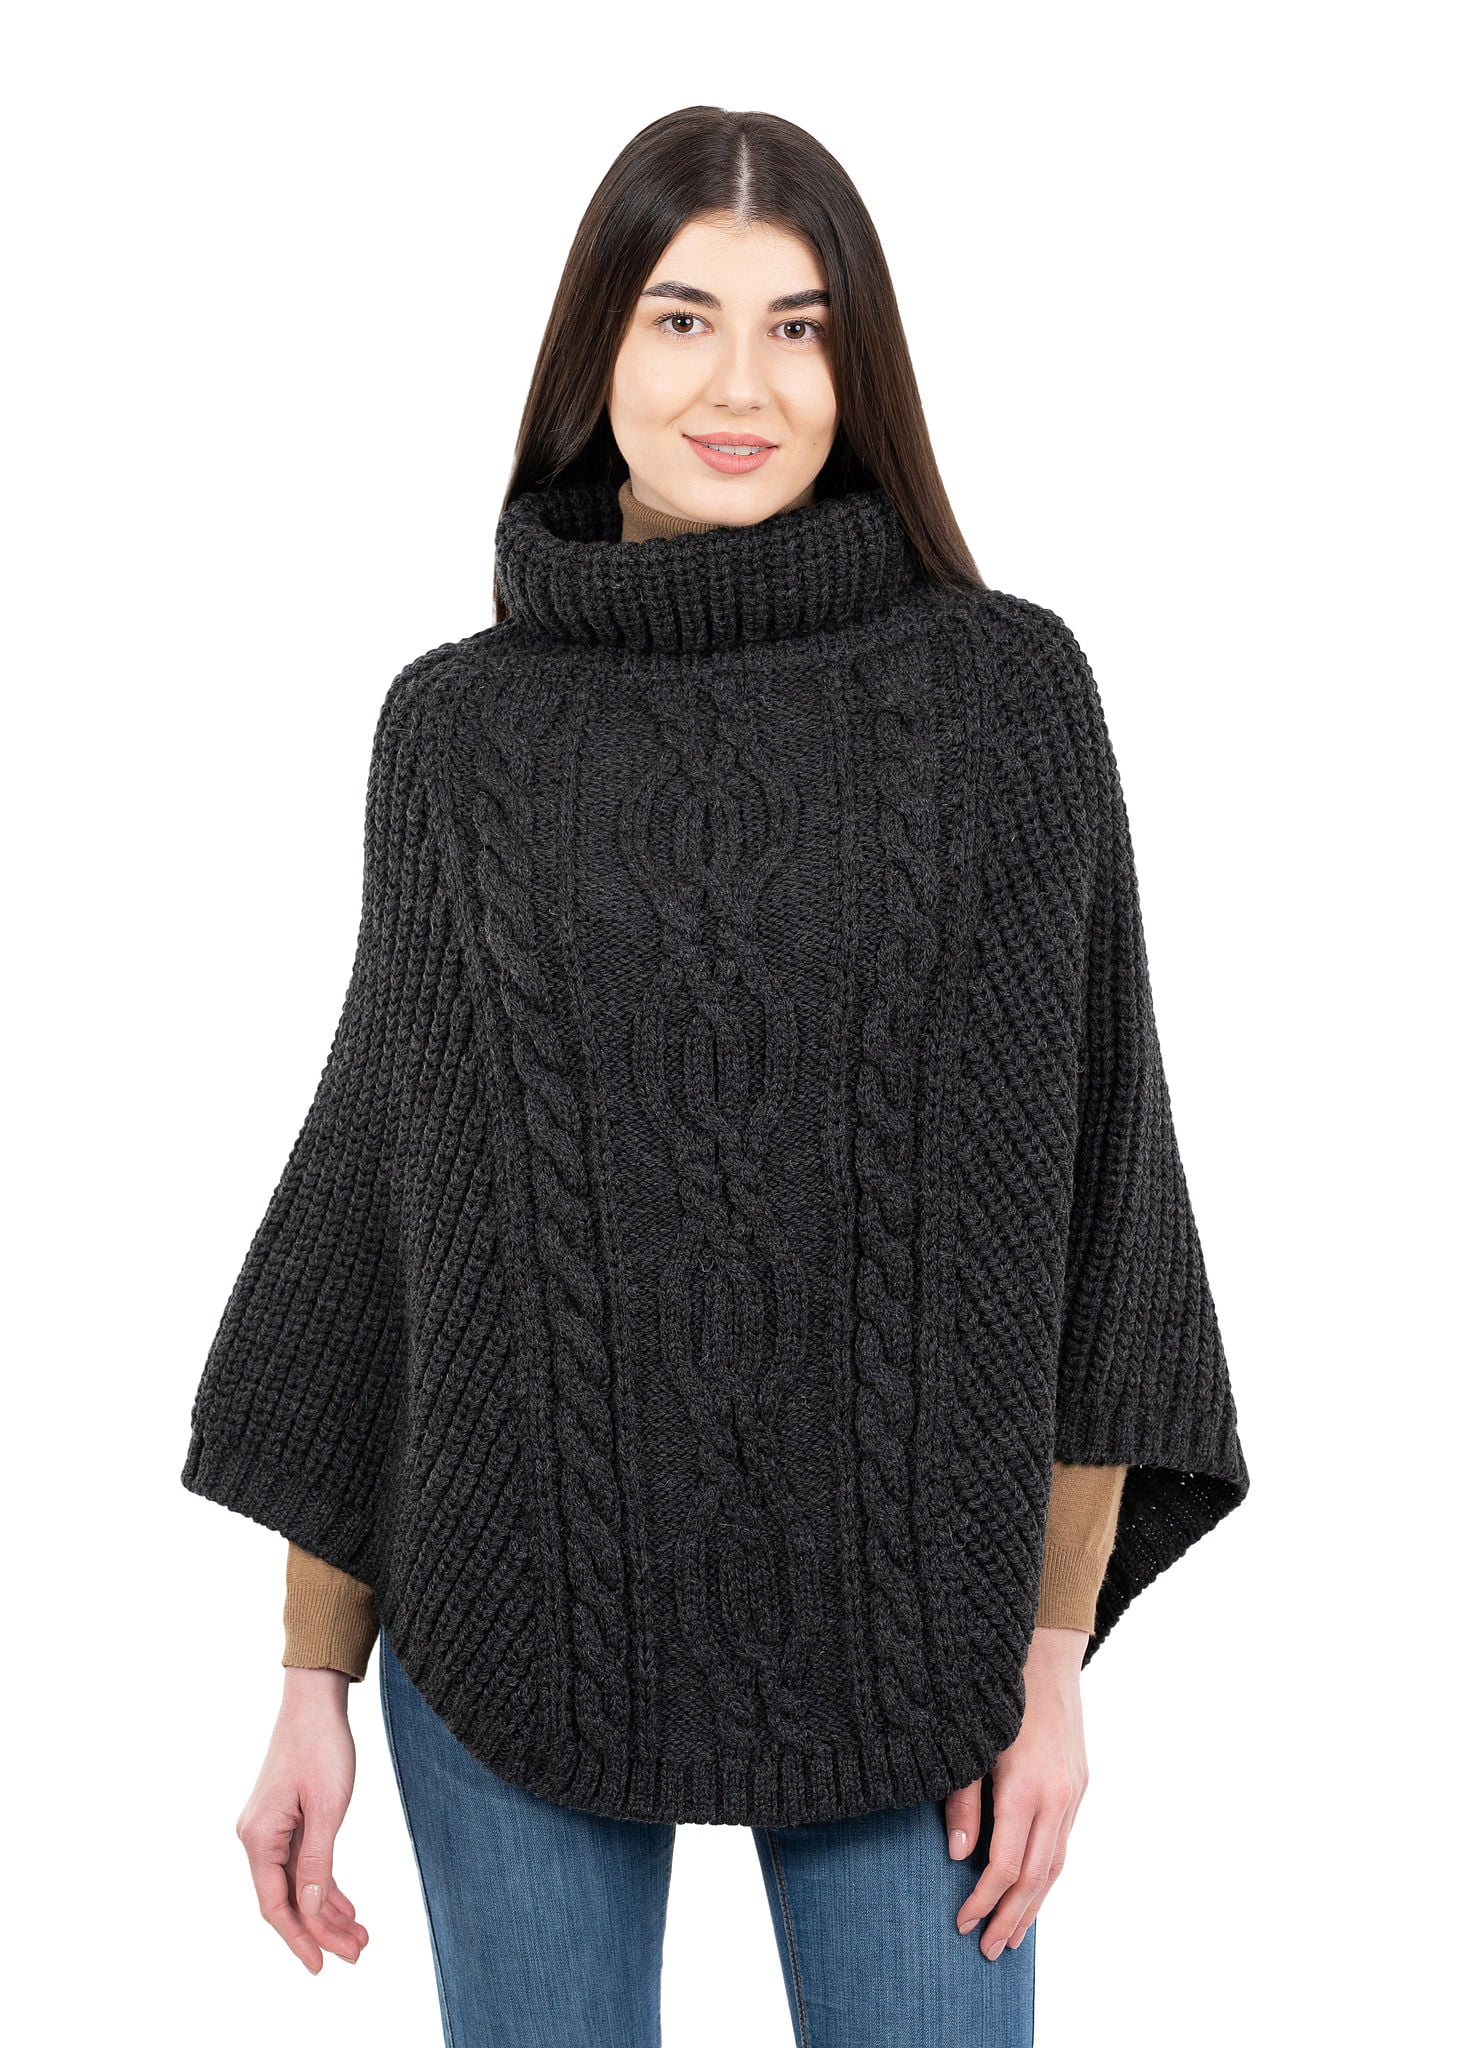 SAOL 100% Merino Wool Women's Aran Cable Knit Poncho Oversize Sweater High  Neck Irish Cape Made in Ireland - Walmart.com